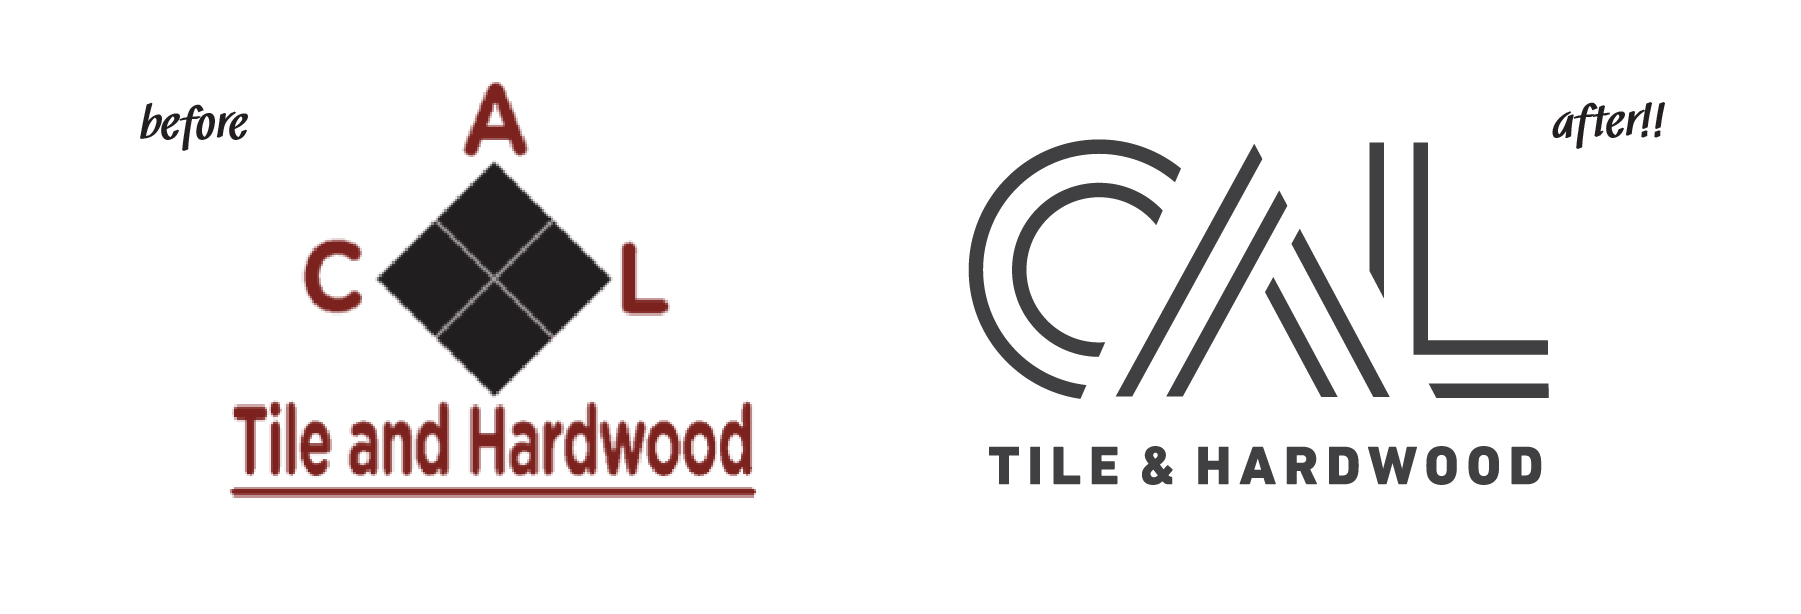 C.A.L. Tile & Hardwood - Branding